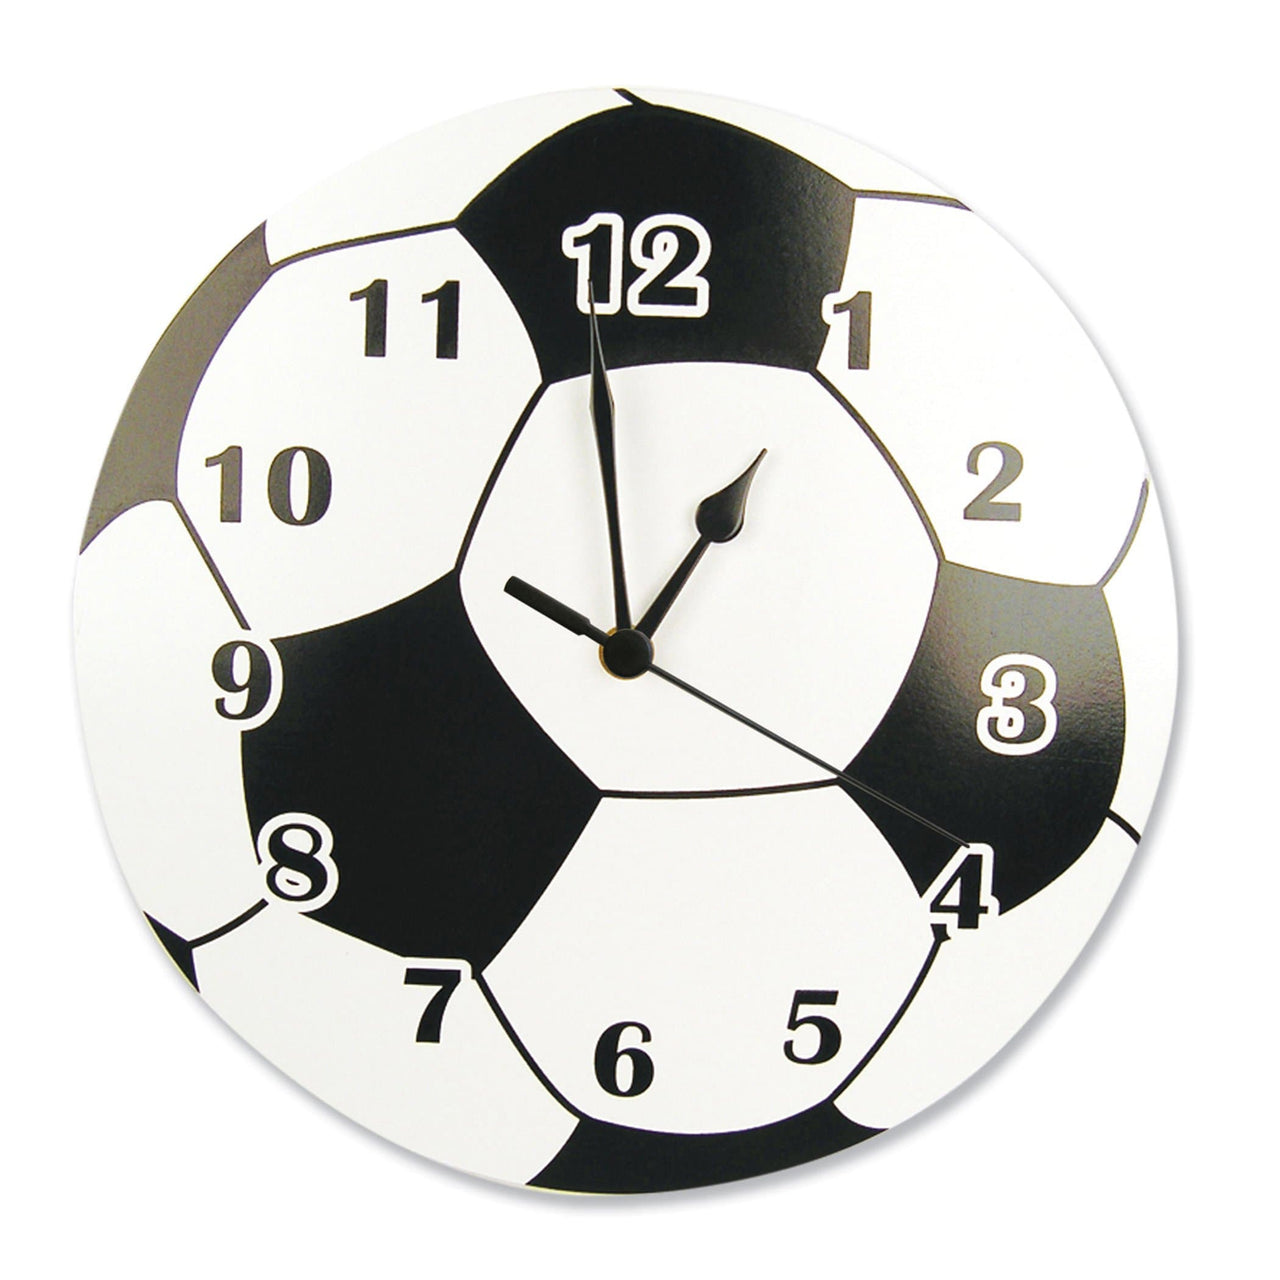 Soccer Wall Clock